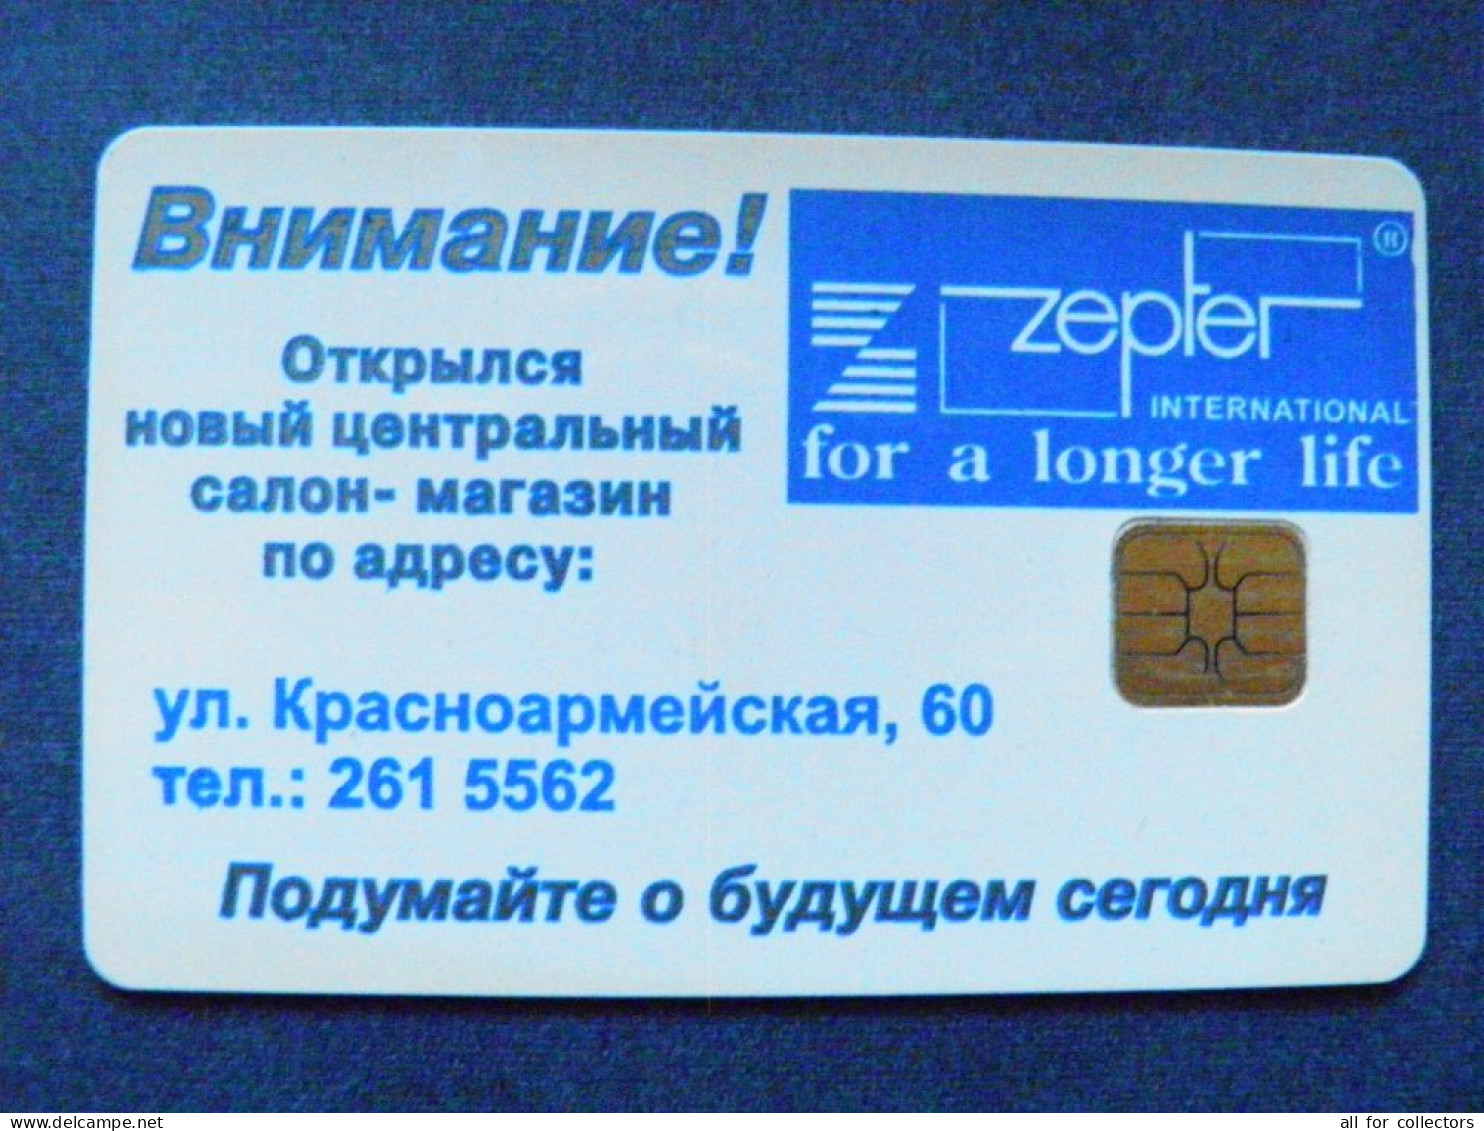 Phonecard Chip Advertising Zepter International For A Longer Life 840 Units UKRAINE Kyiv - Ucraina